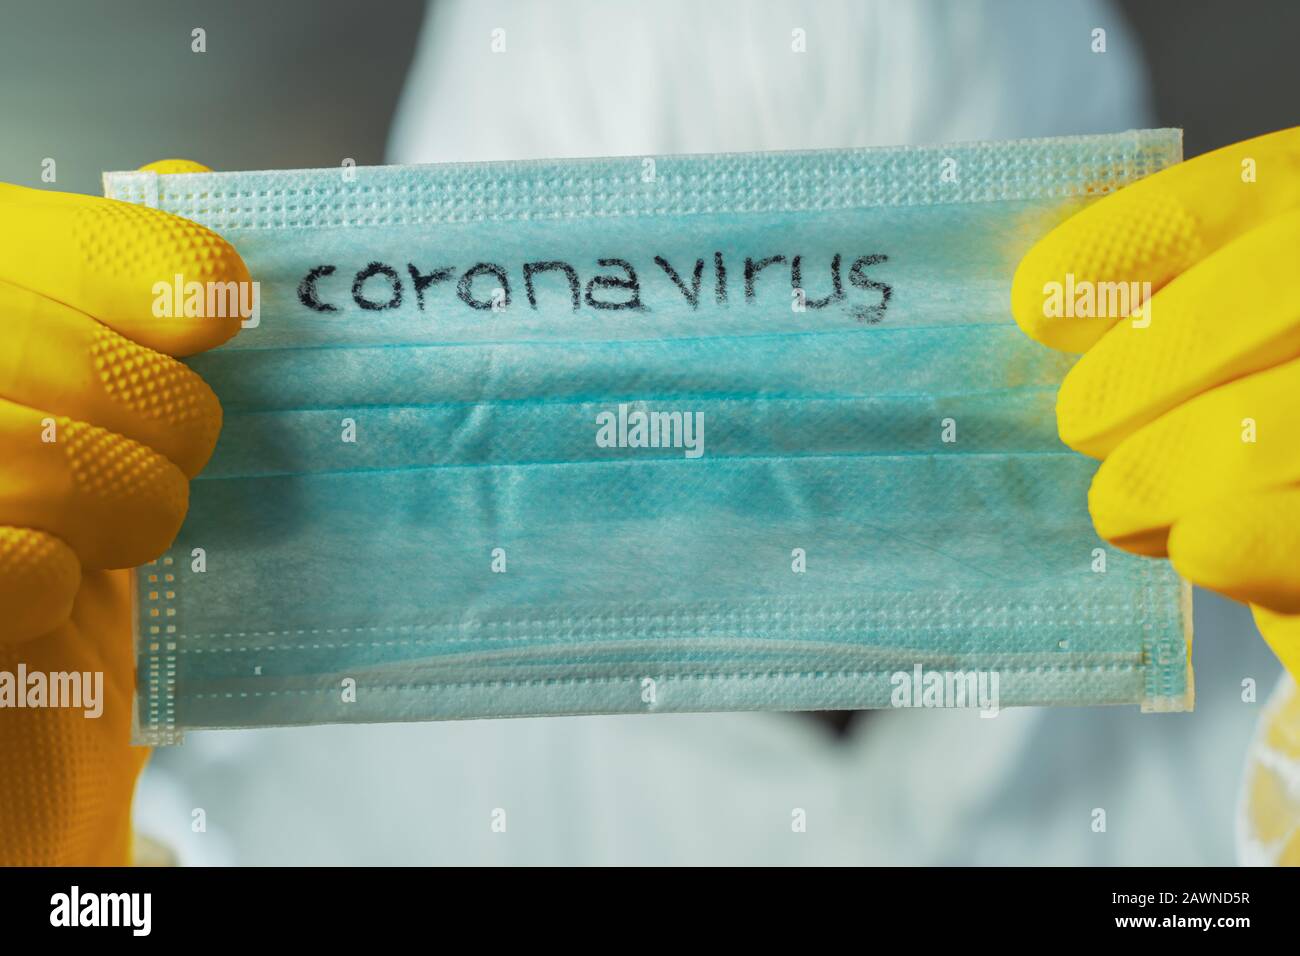 Epidemiologist holding Coronavirus respiratory mask, close up Stock Photo